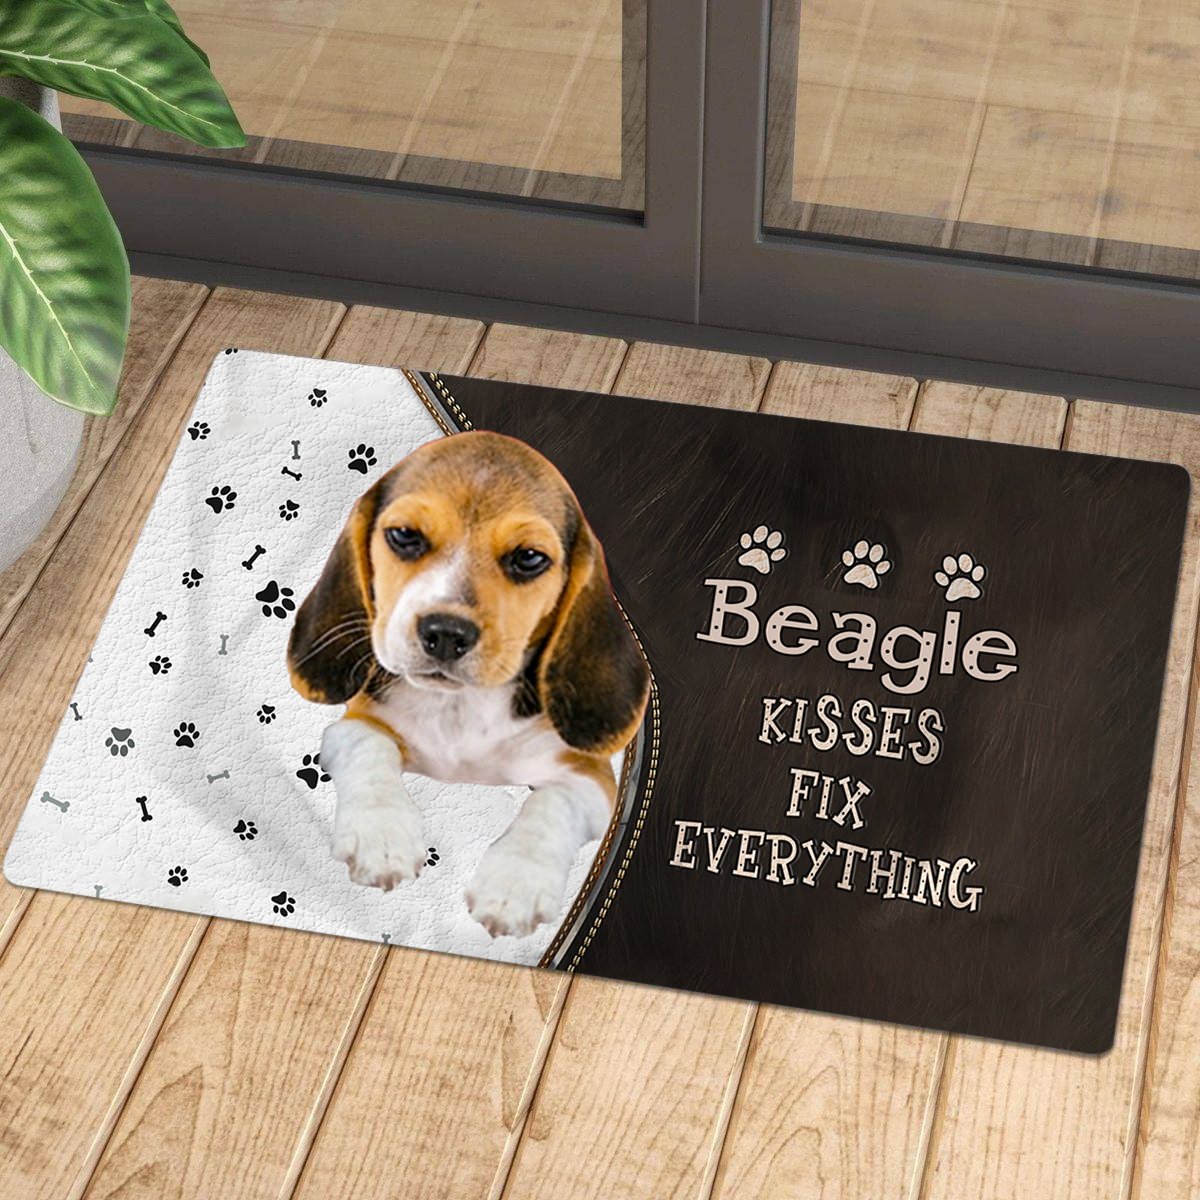 Beagle2 Kisses Fix Everything Doormat